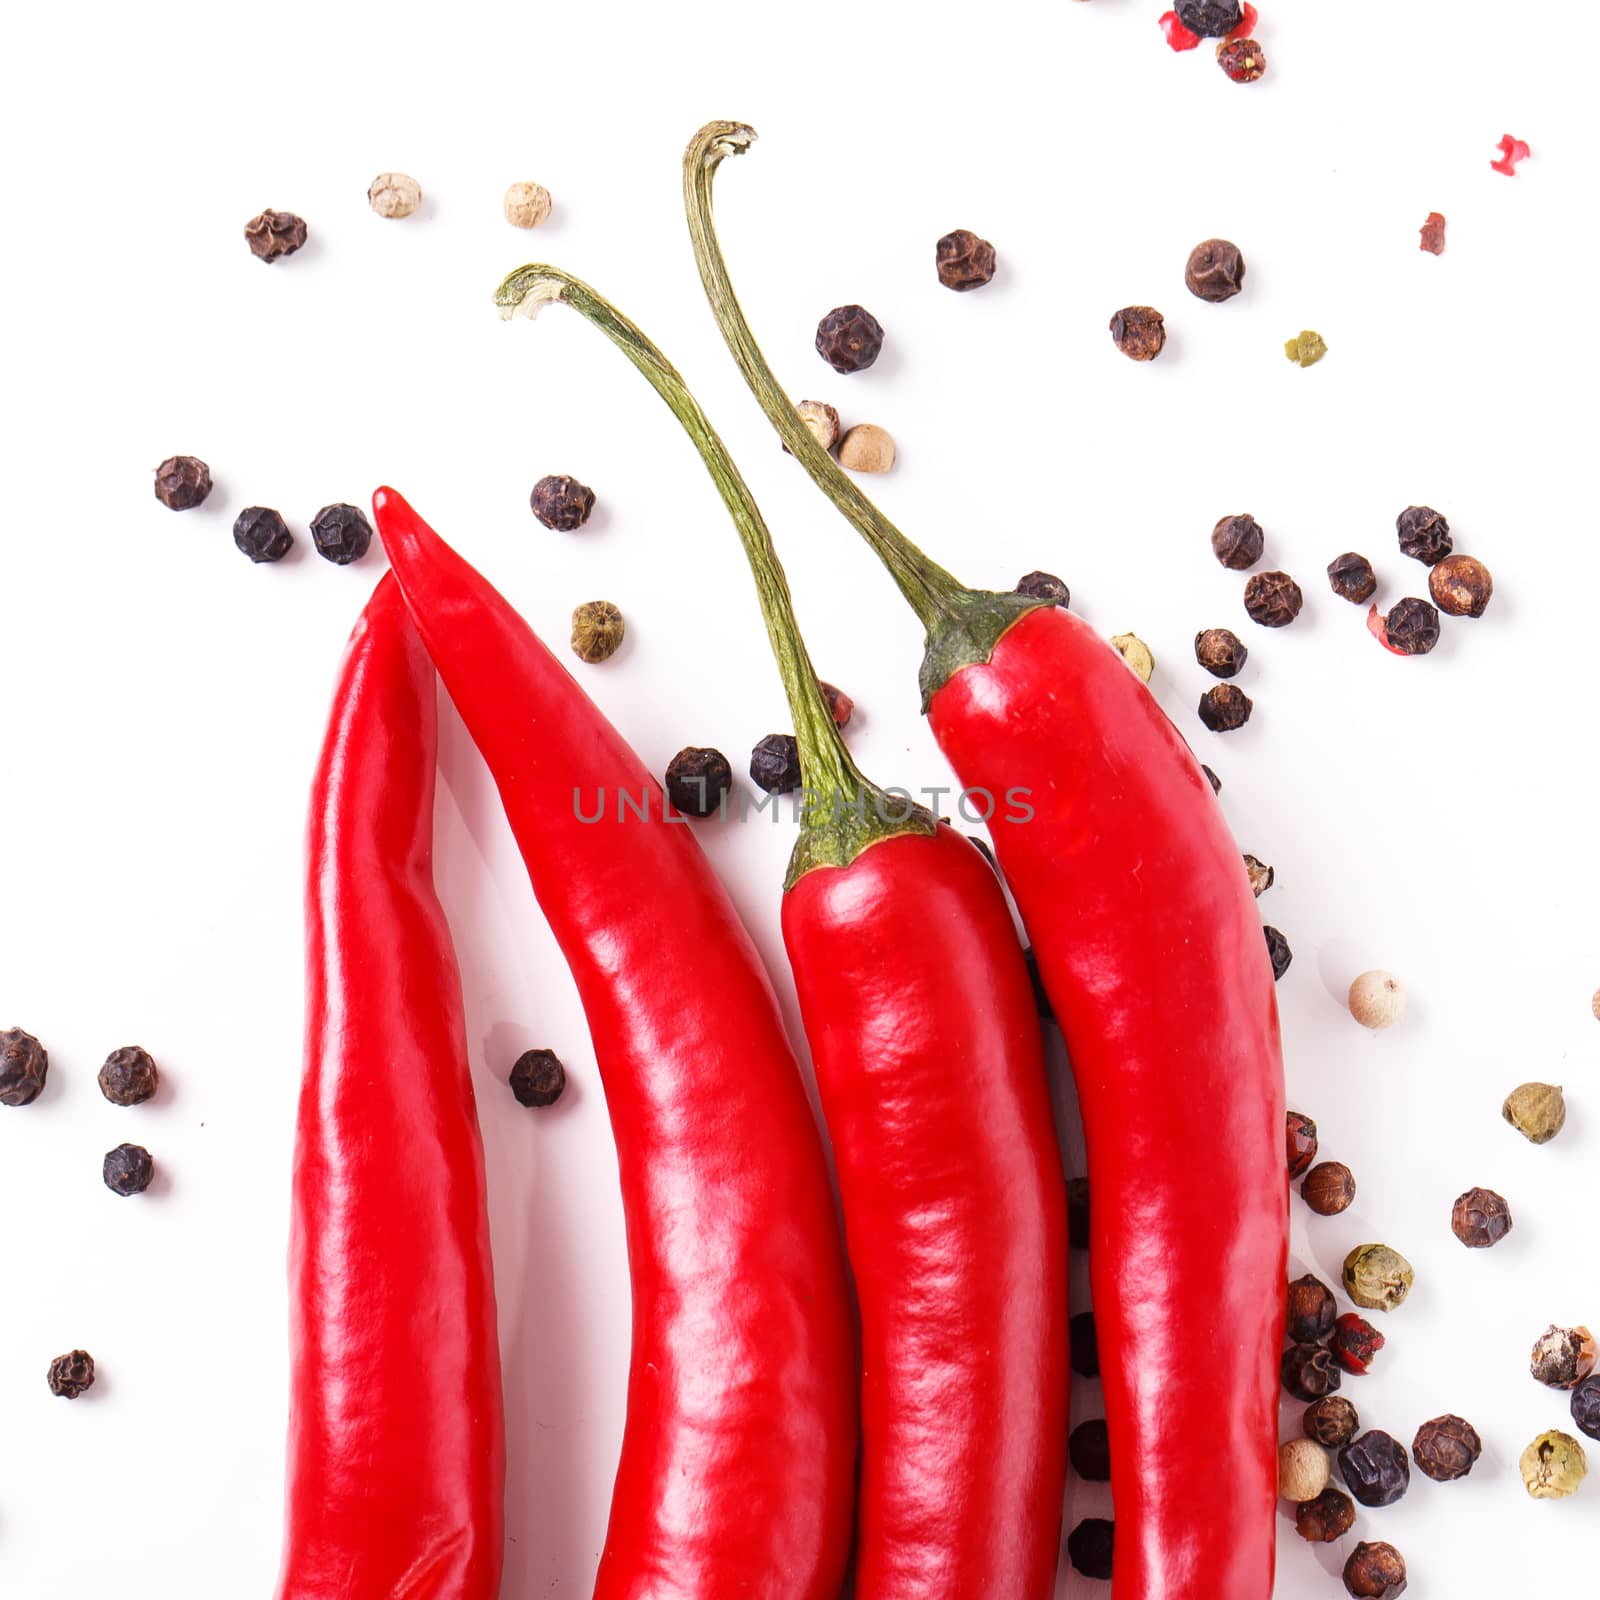 Red chili pepper by rufatjumali